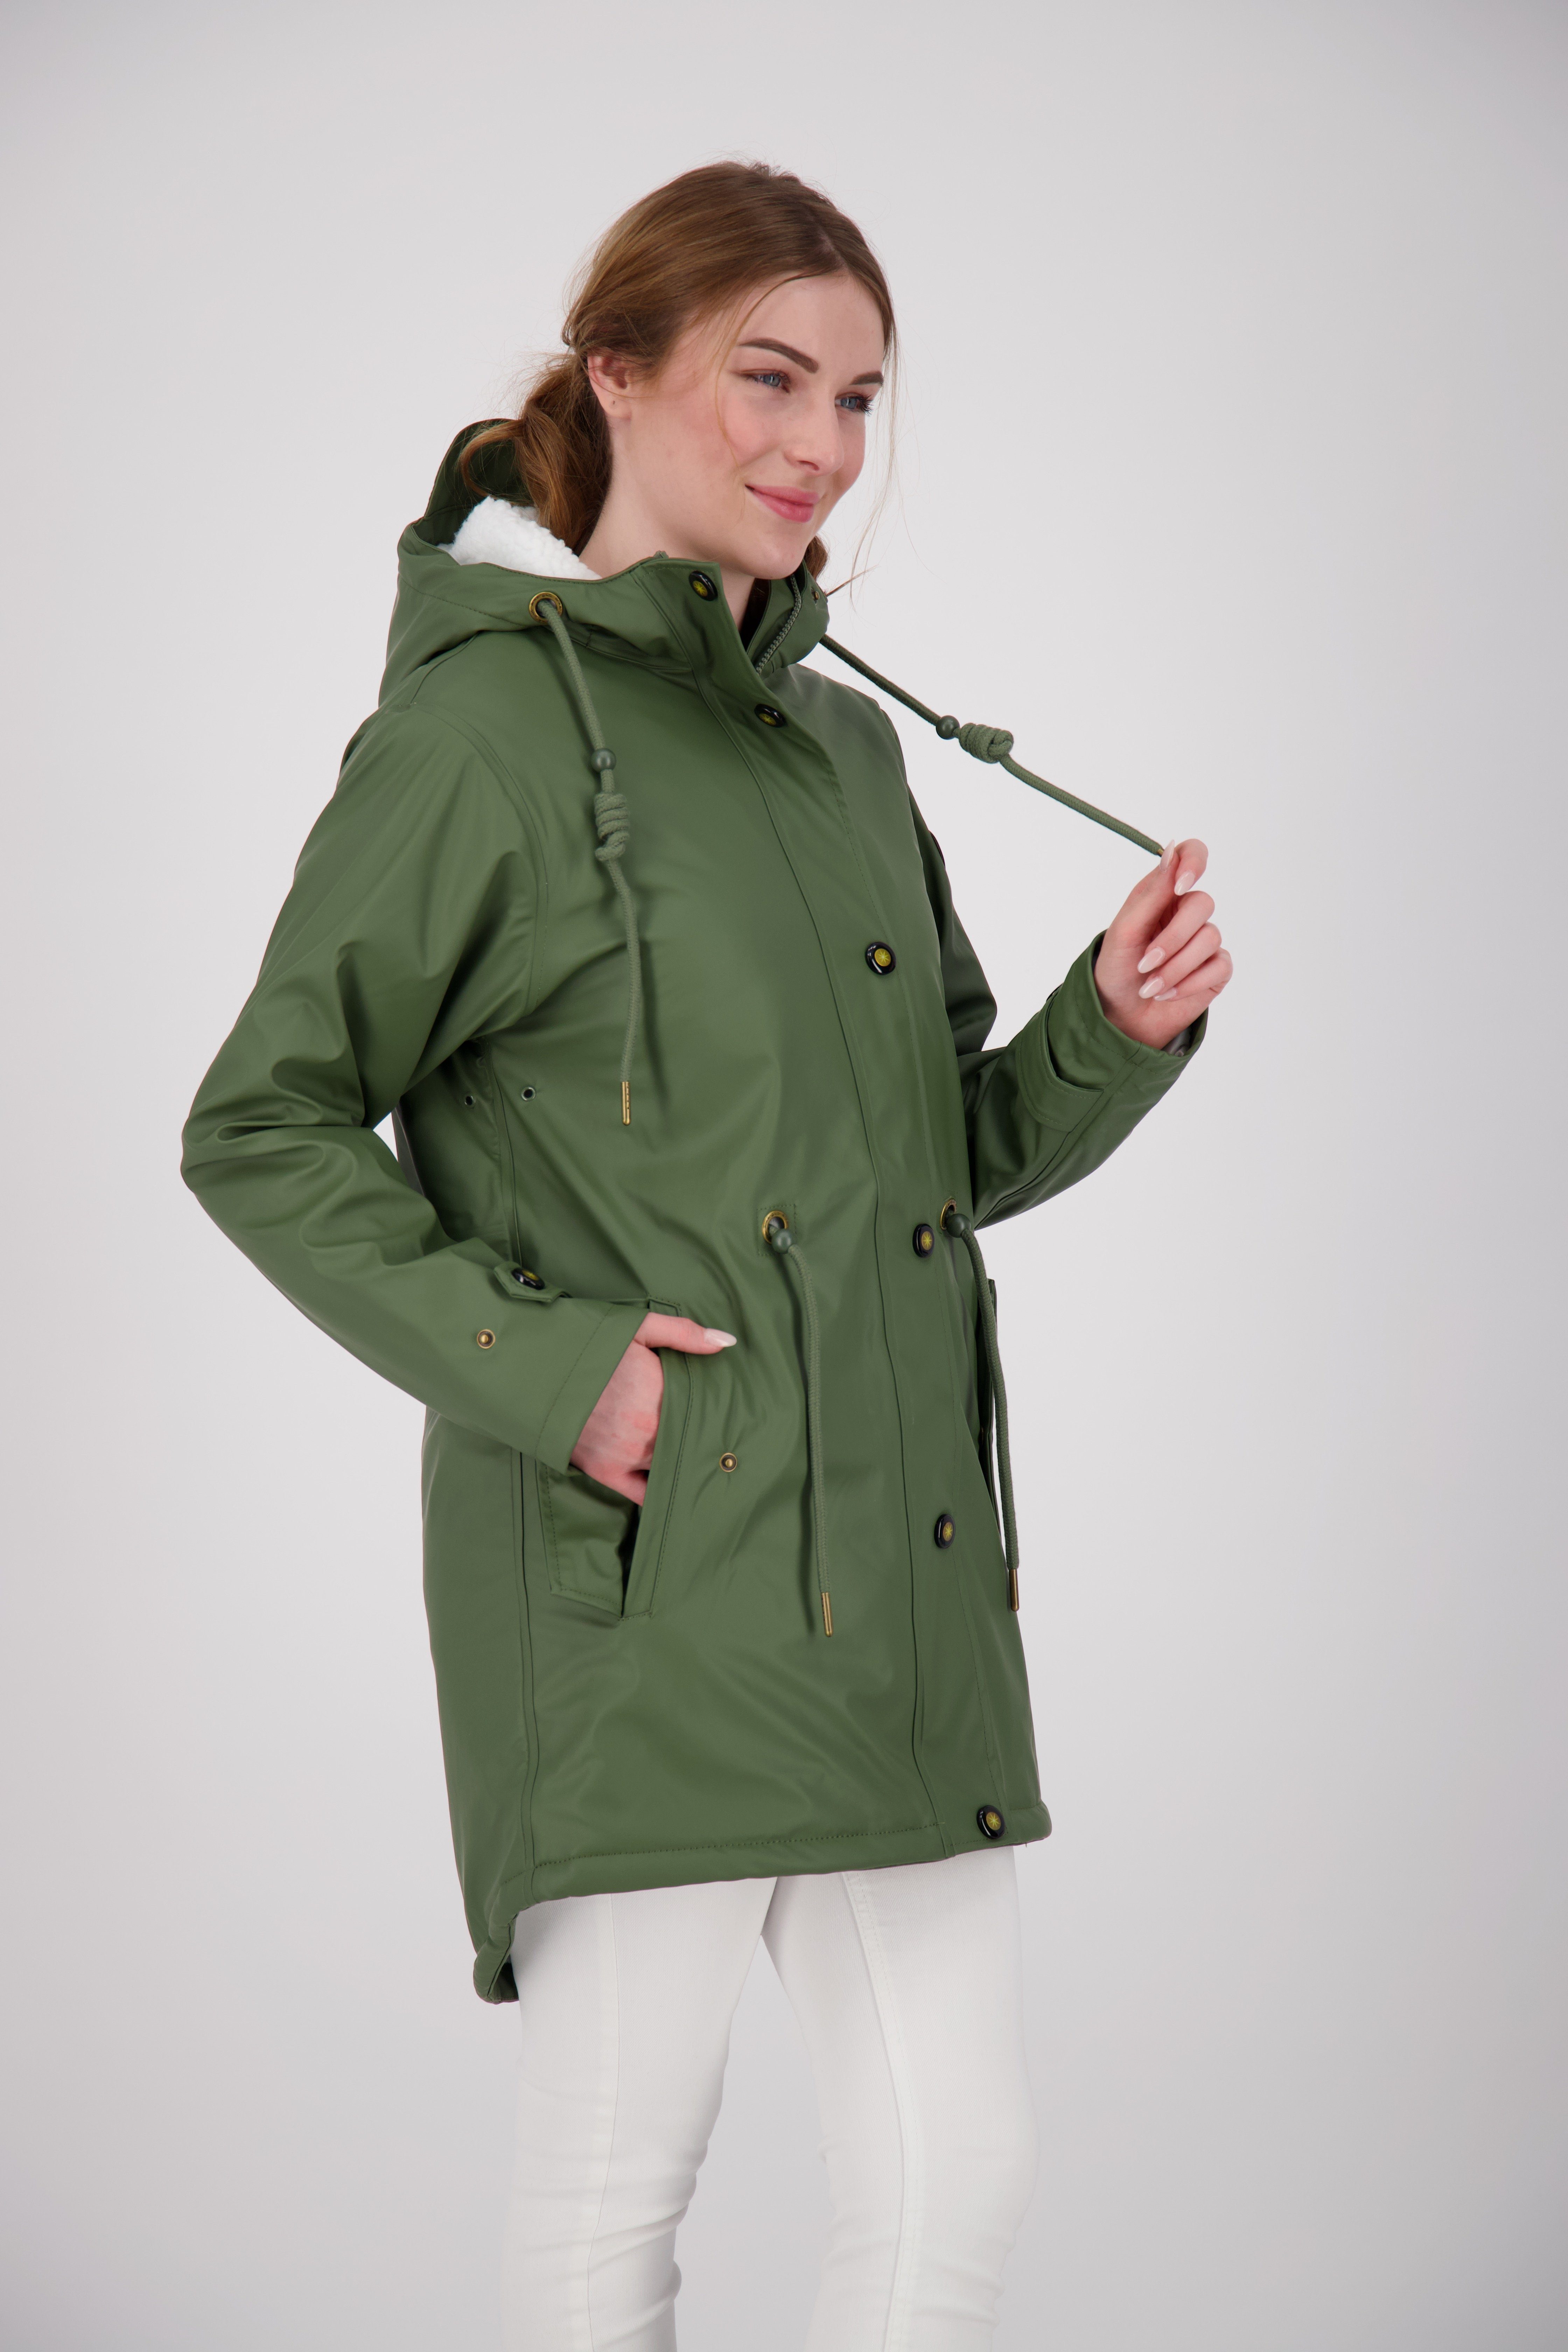 DEPROC Active Regenjacke Regenjacke #ankergluttraum CS erhältlich & in olive Großen WOMEN NEW auch Größen ANKERGLUT Longjacket